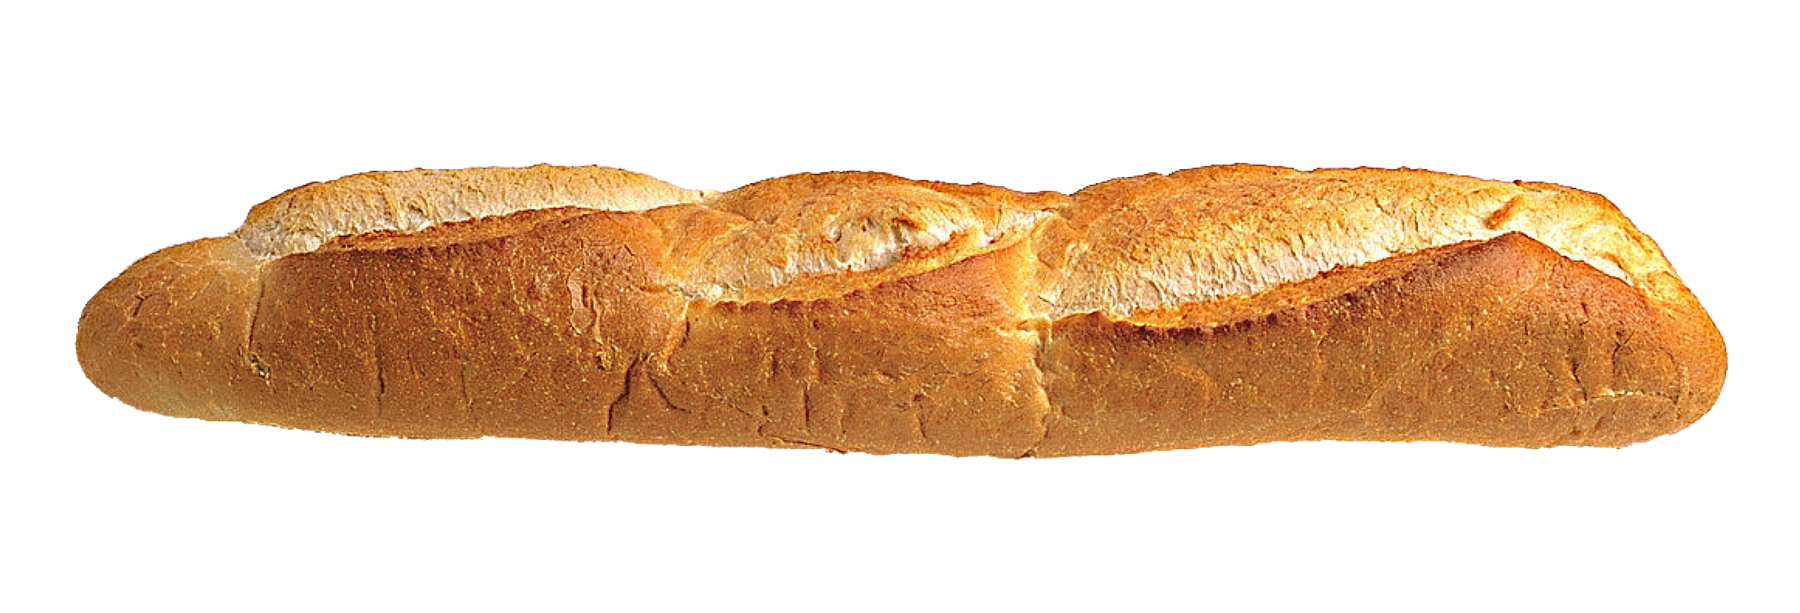 Loaf Bake Bread PNG Image High Quality PNG Image